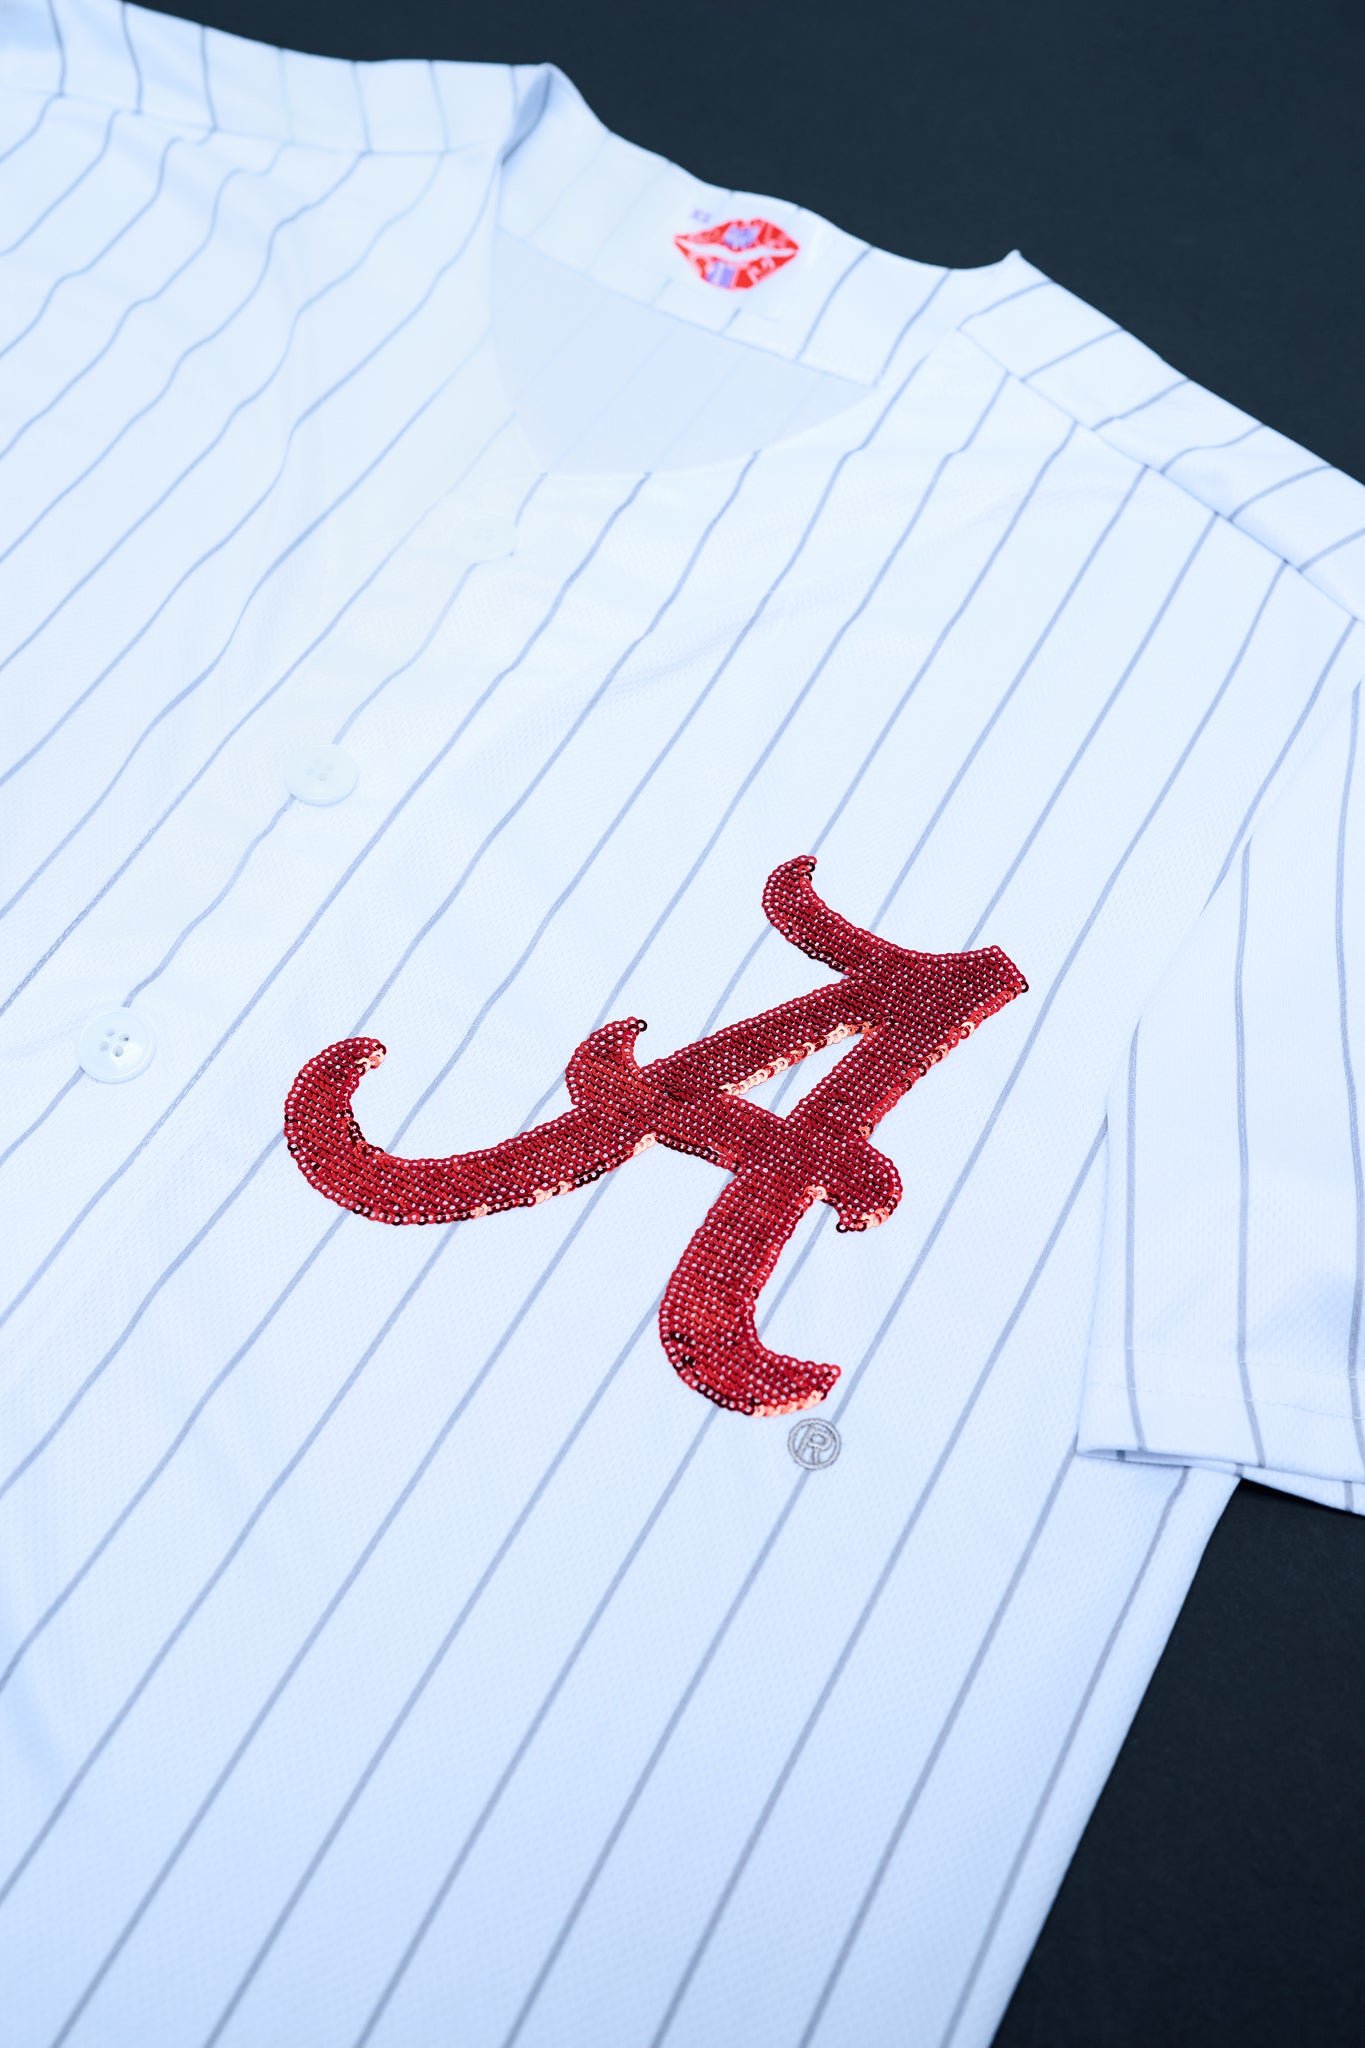 Pinstripe Alabama Baseball uniform